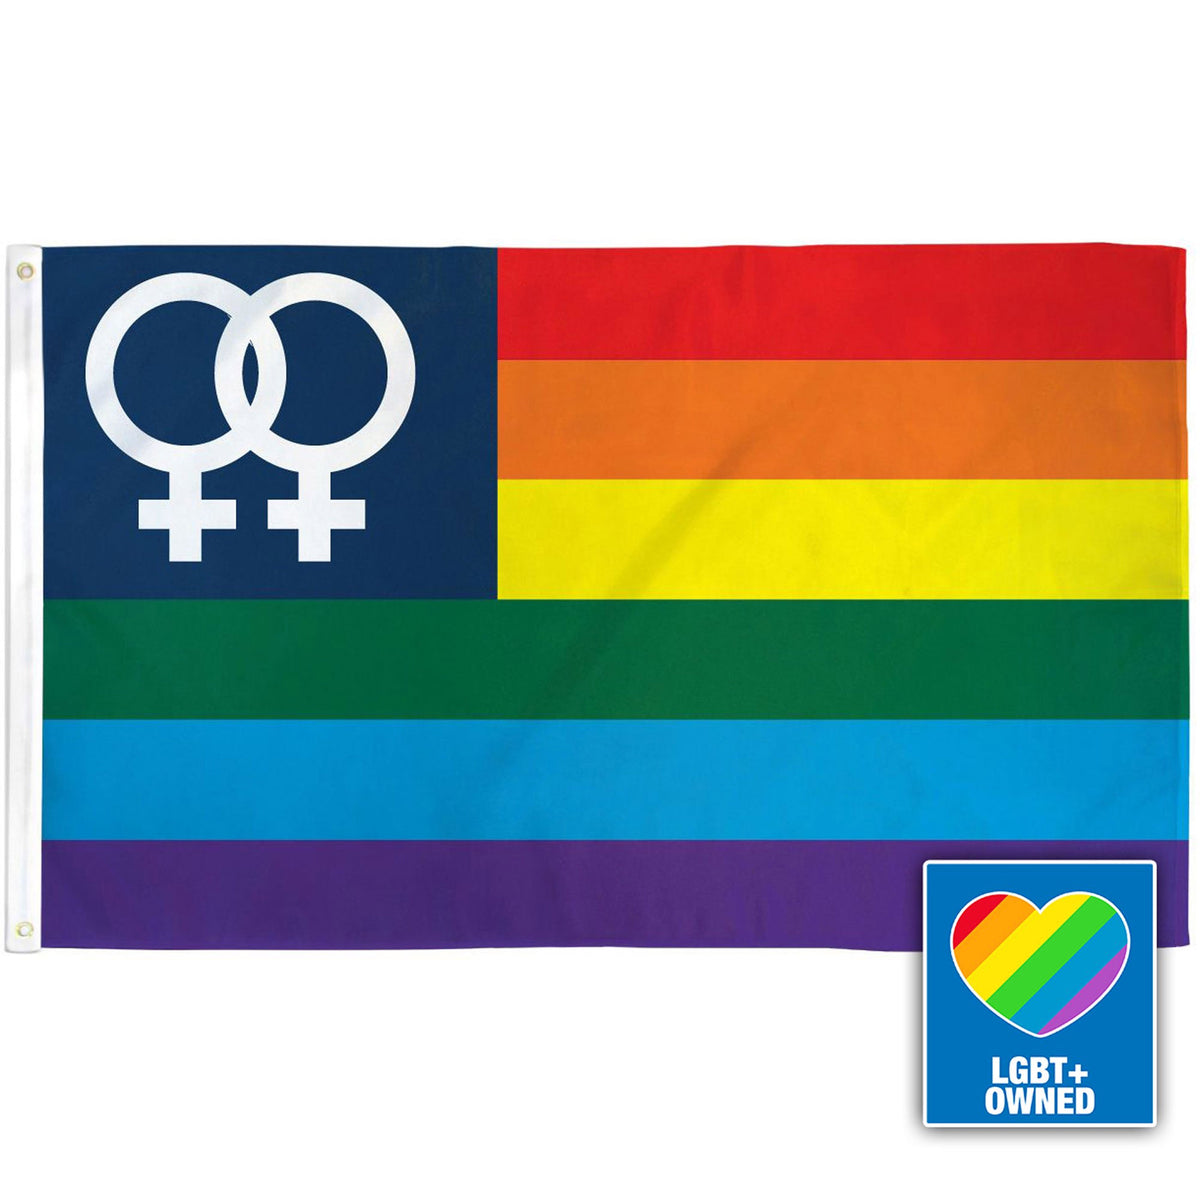 Women's SM Symbols Rainbow 3' x 5' Flag - Celebrate Diversity and Unity